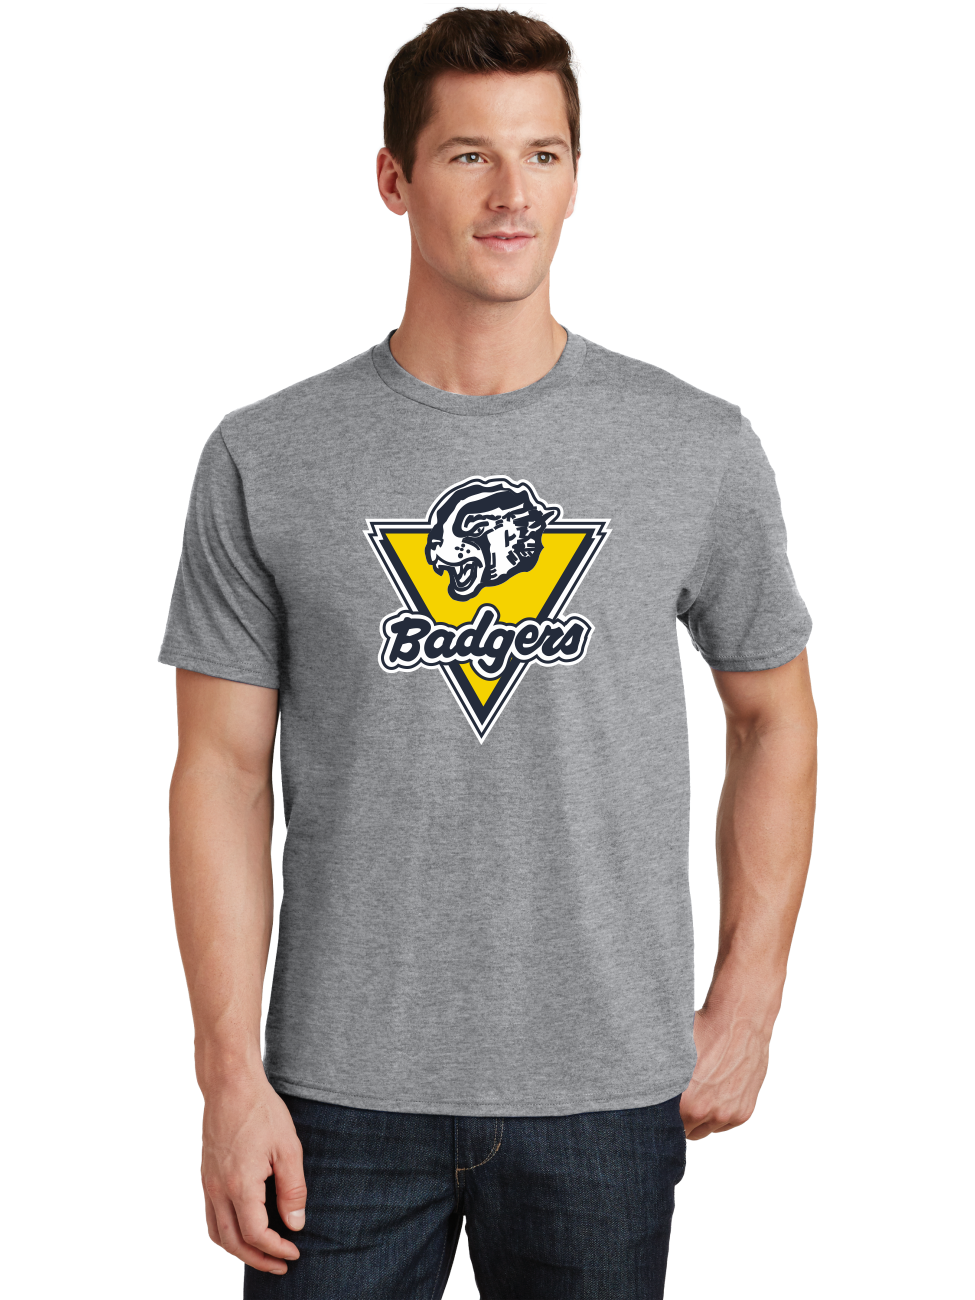 Logo T-Shirt - BCB - Multiple Colors Available